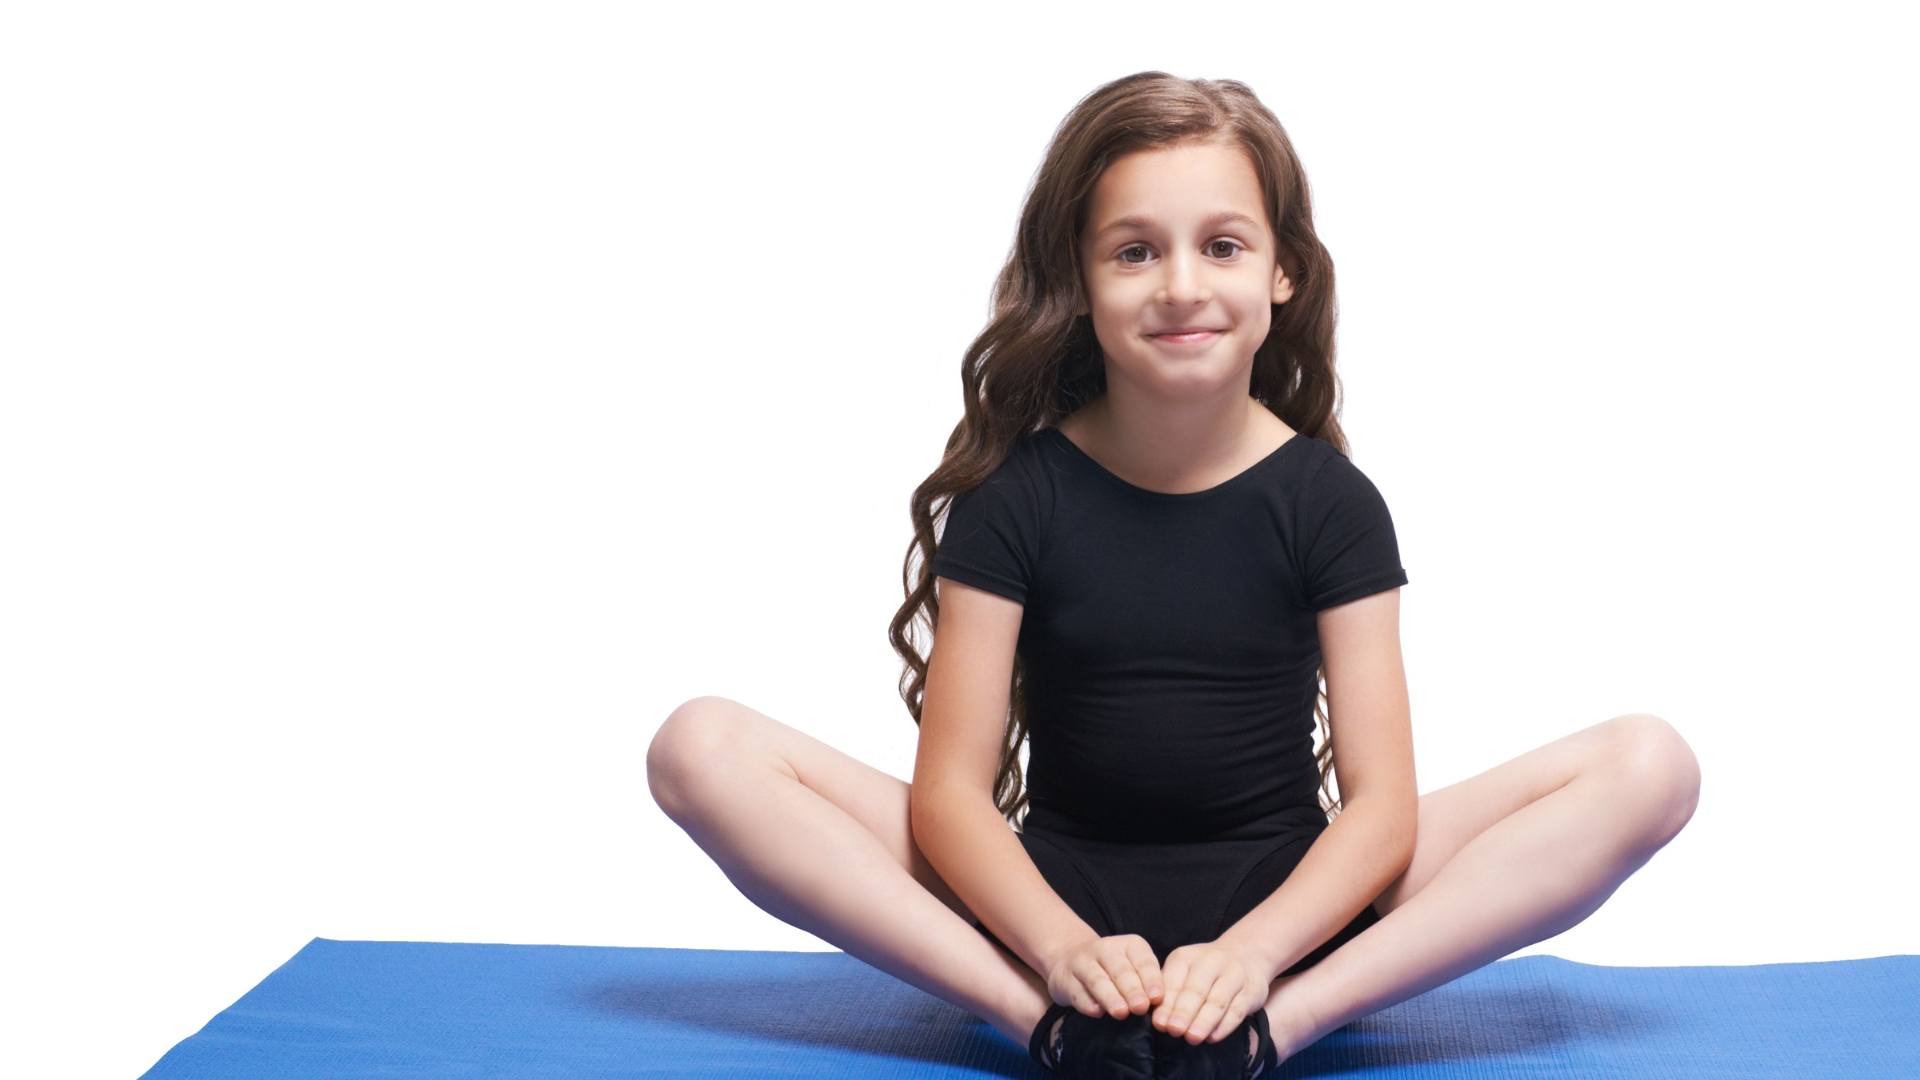 What Skills Does Yoga Teach Children